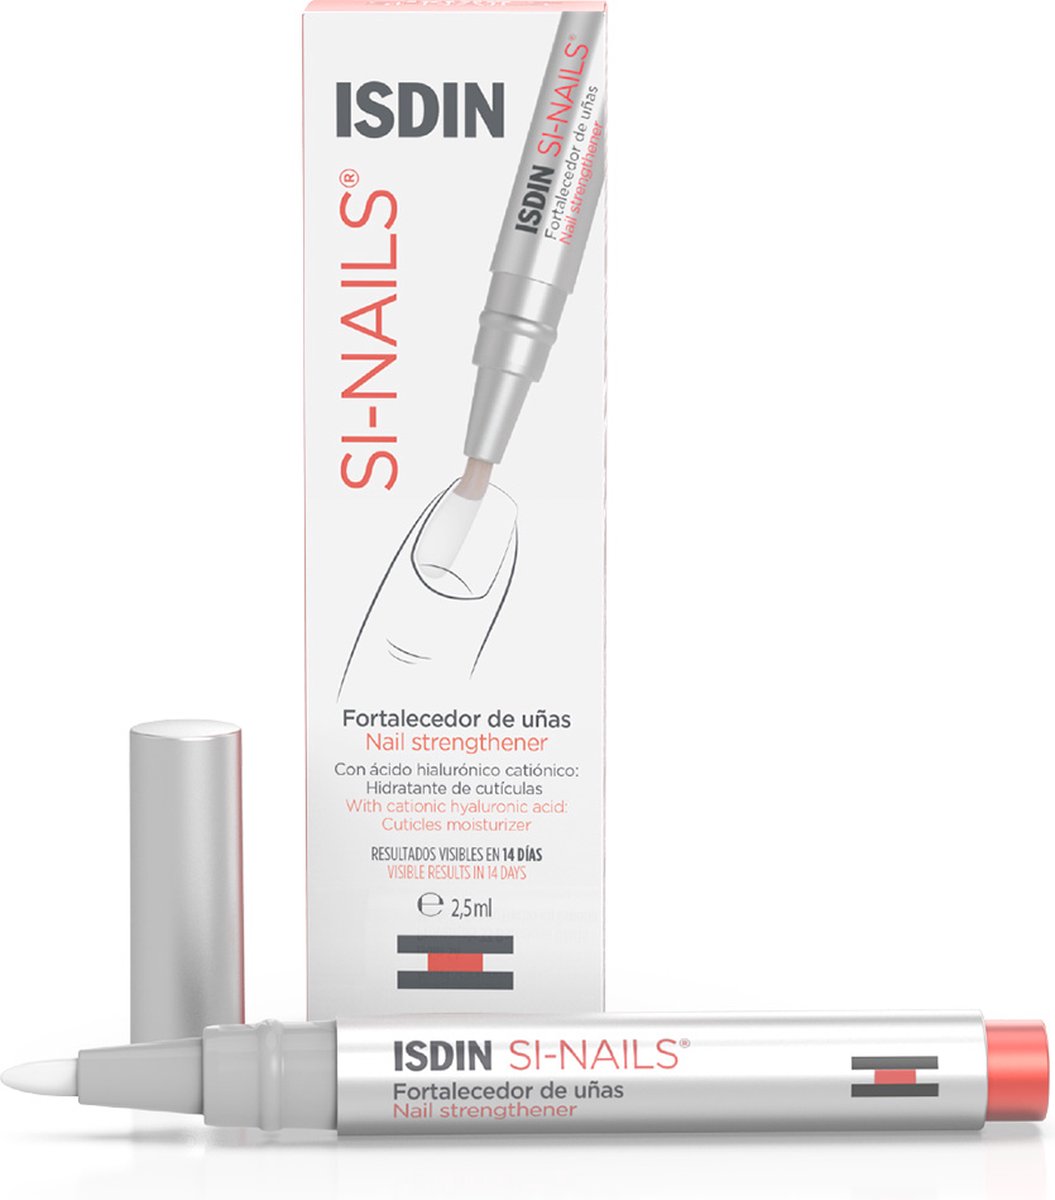 ISDIN - Fortalecedor De Uñas Si-Nails